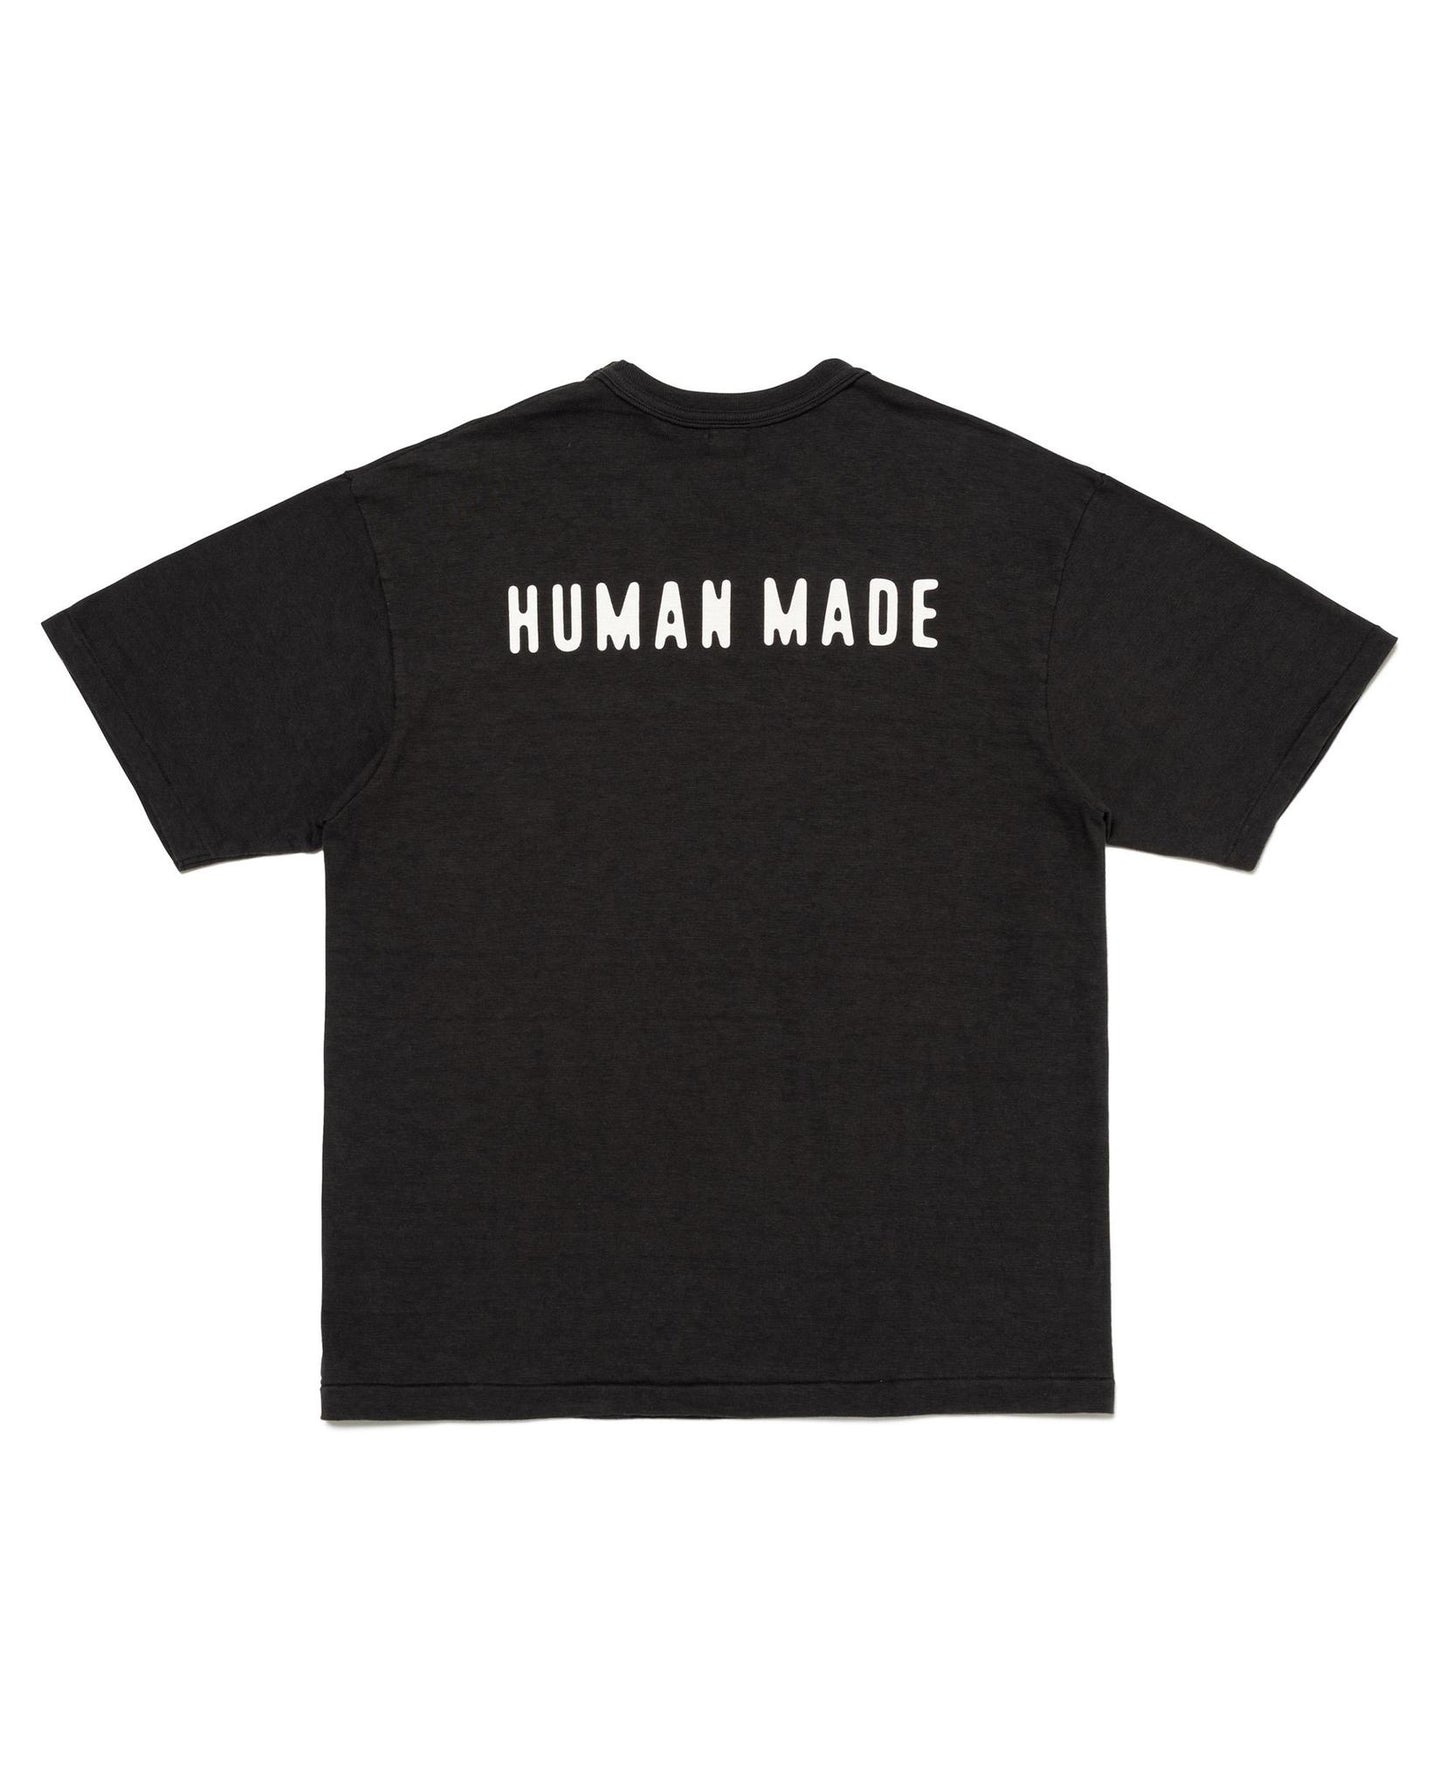 Human Made Graphic T-Shirt #1 | STASHED